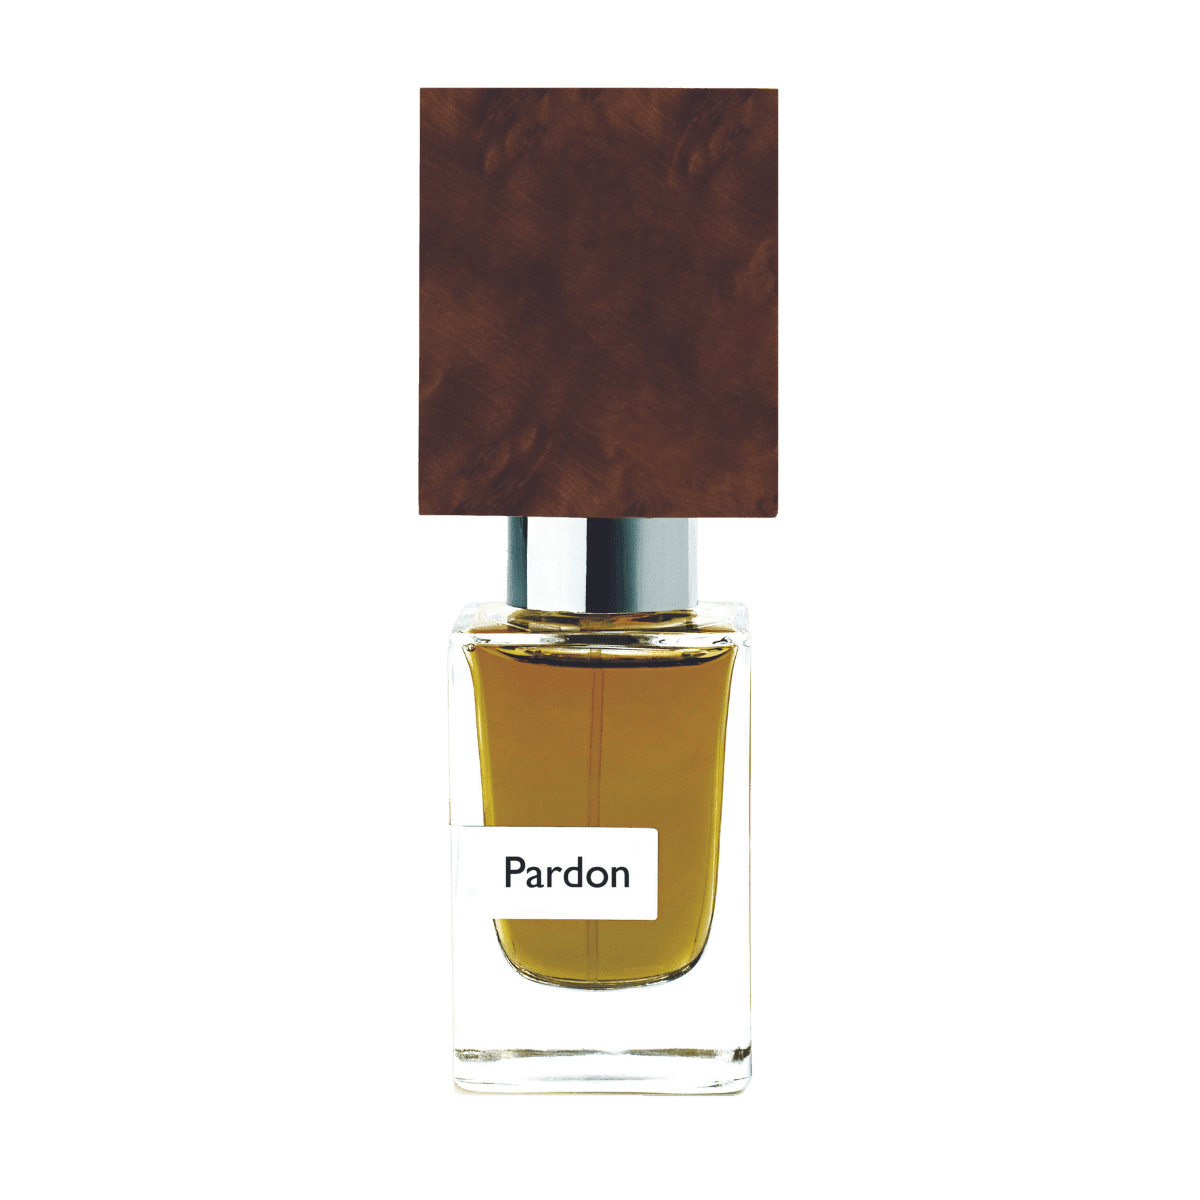 Image of Pardon extrait de parfum 30 ml by the perfume brand Nasomatto